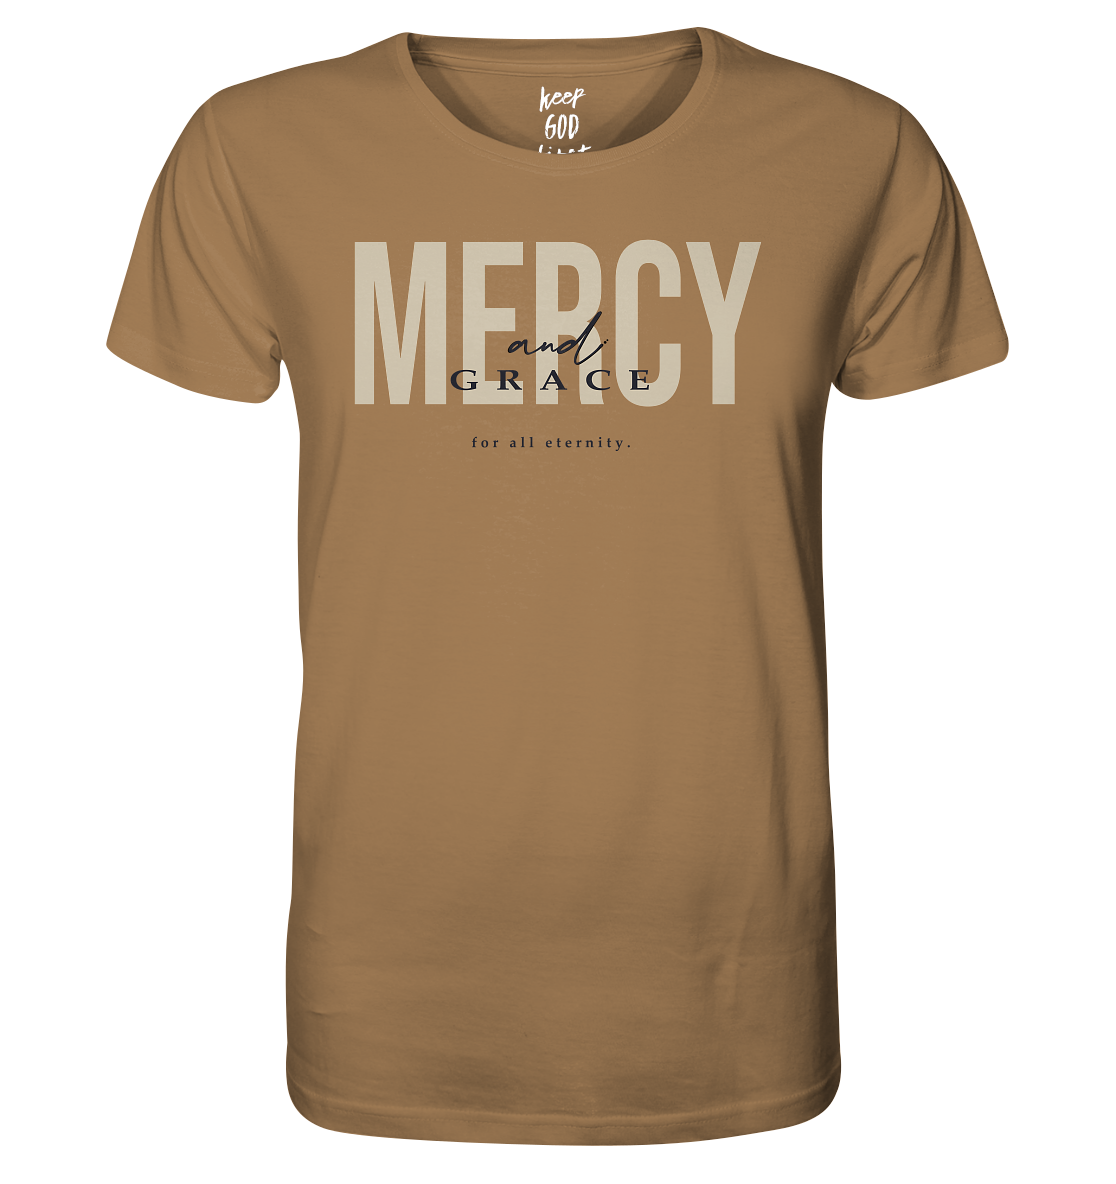 Mercy & Grace Shirt